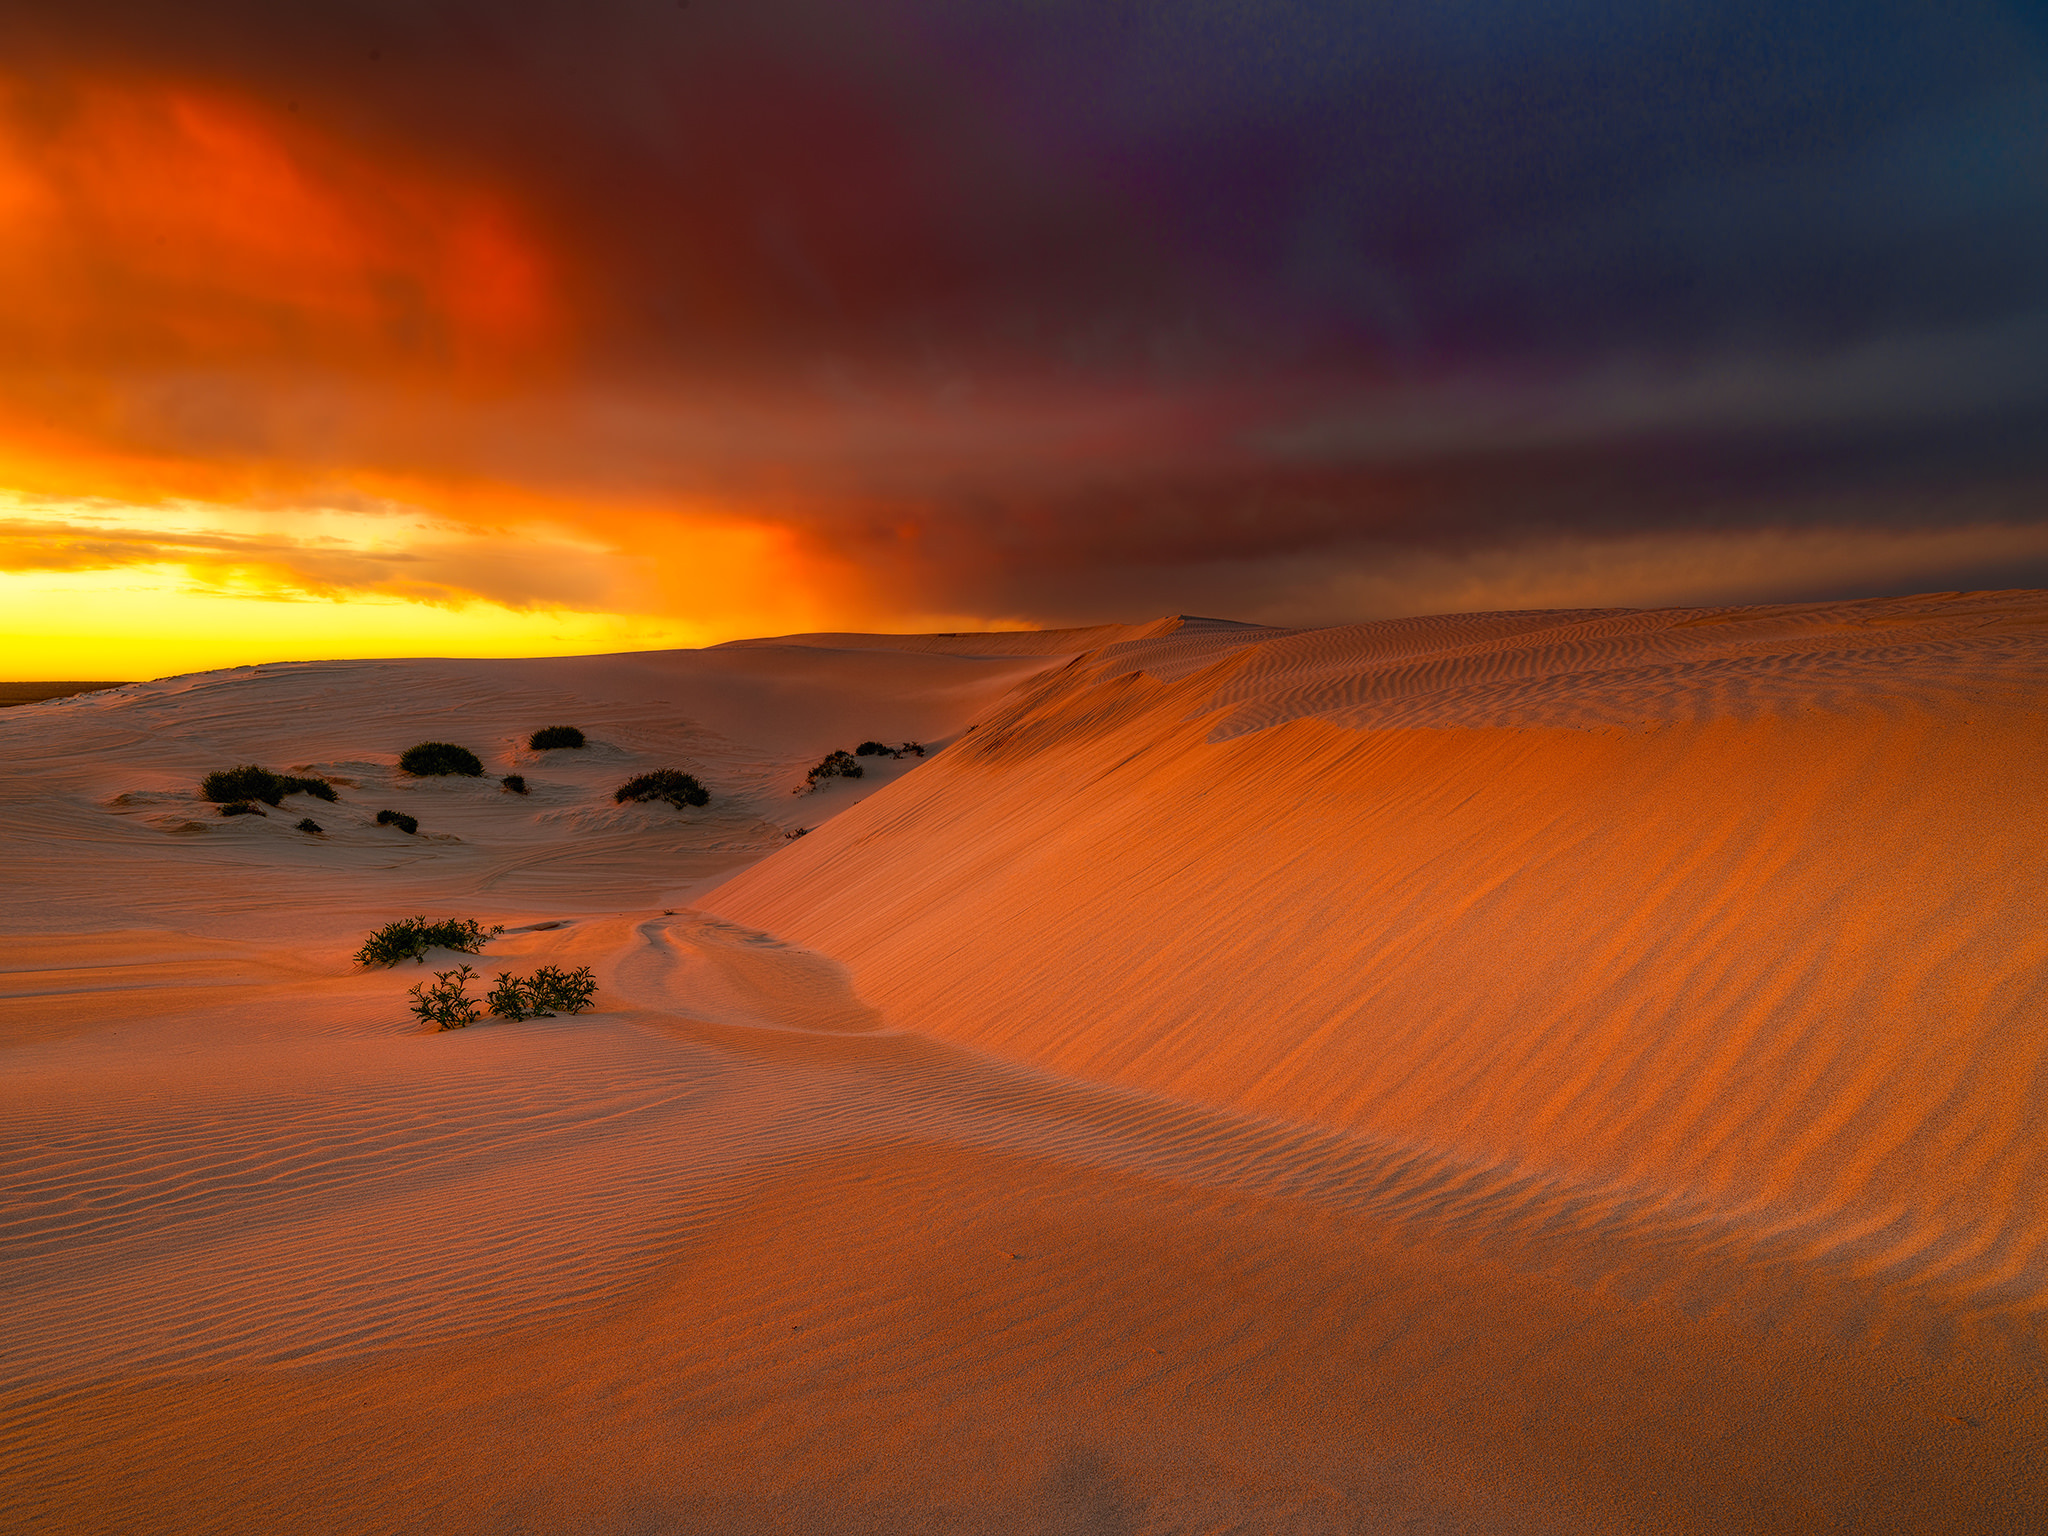 Descarga gratis la imagen Naturaleza, Cielo, Desierto, Duna, Australia, Atardecer, Tierra/naturaleza en el escritorio de tu PC